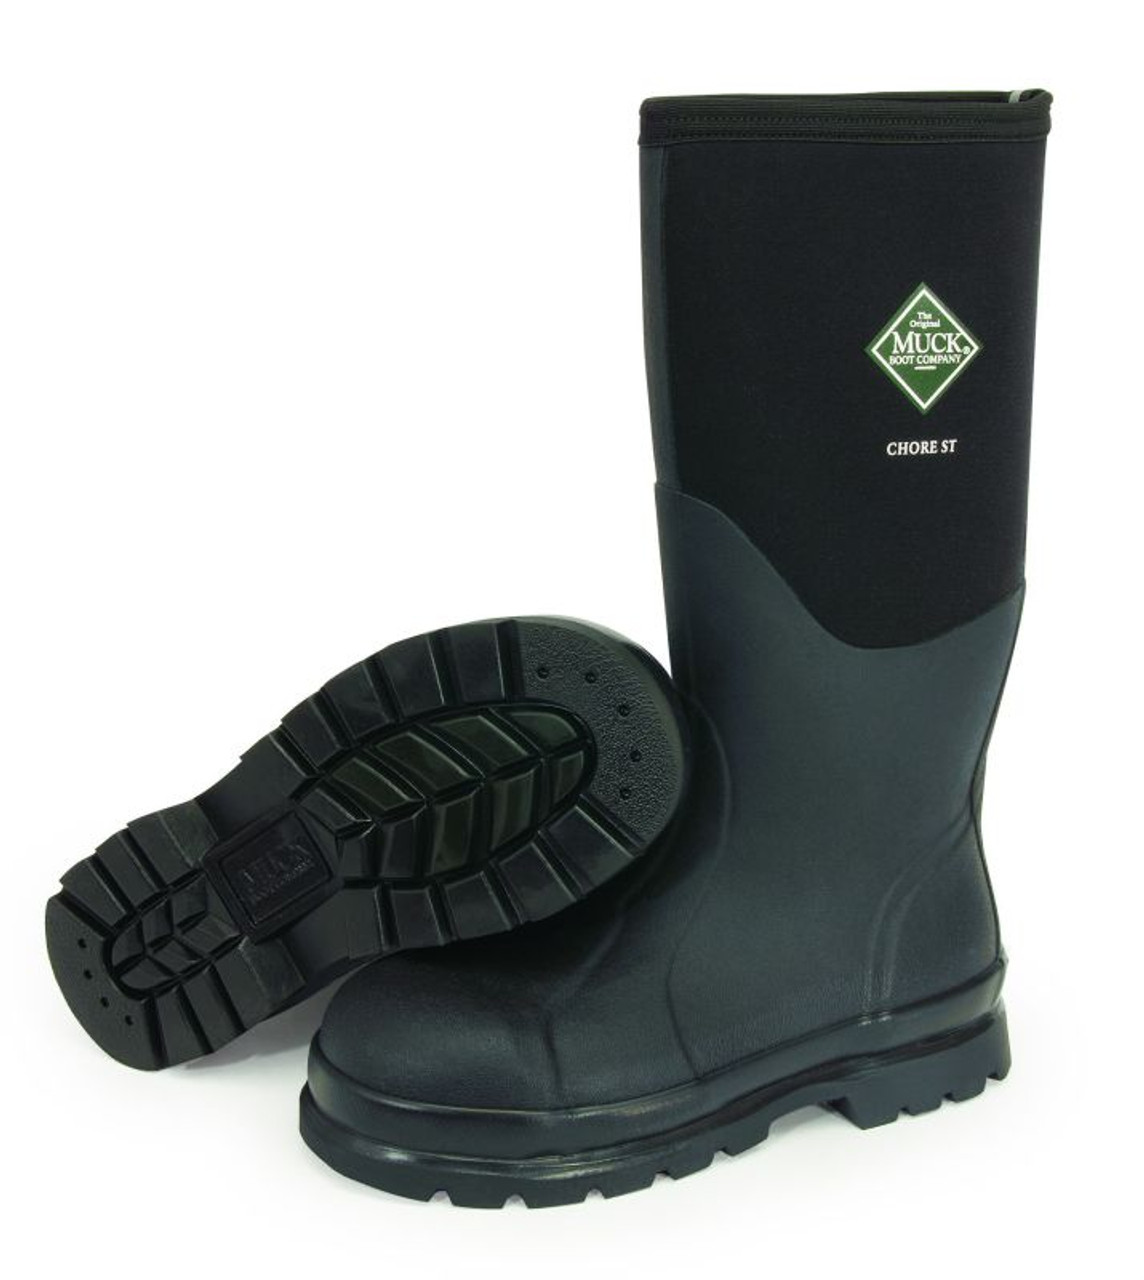 waterproof work boots australia